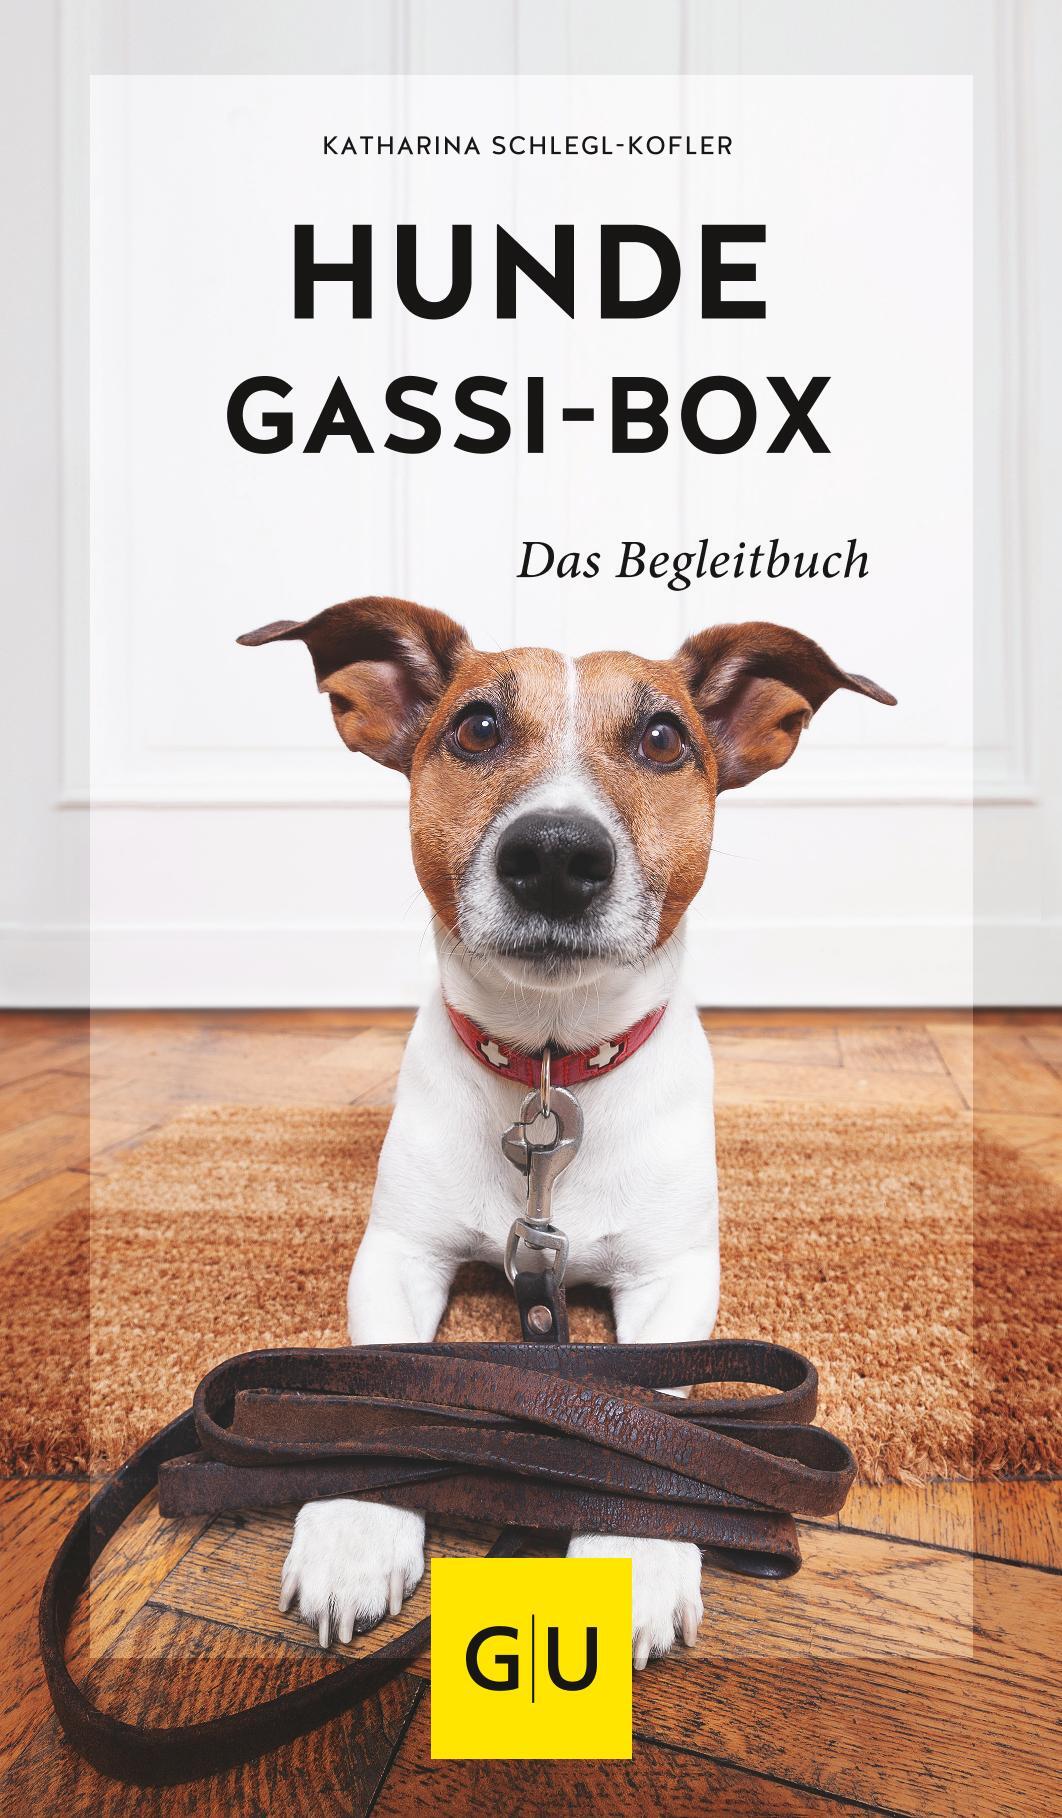 Hunde-Gassi-Box